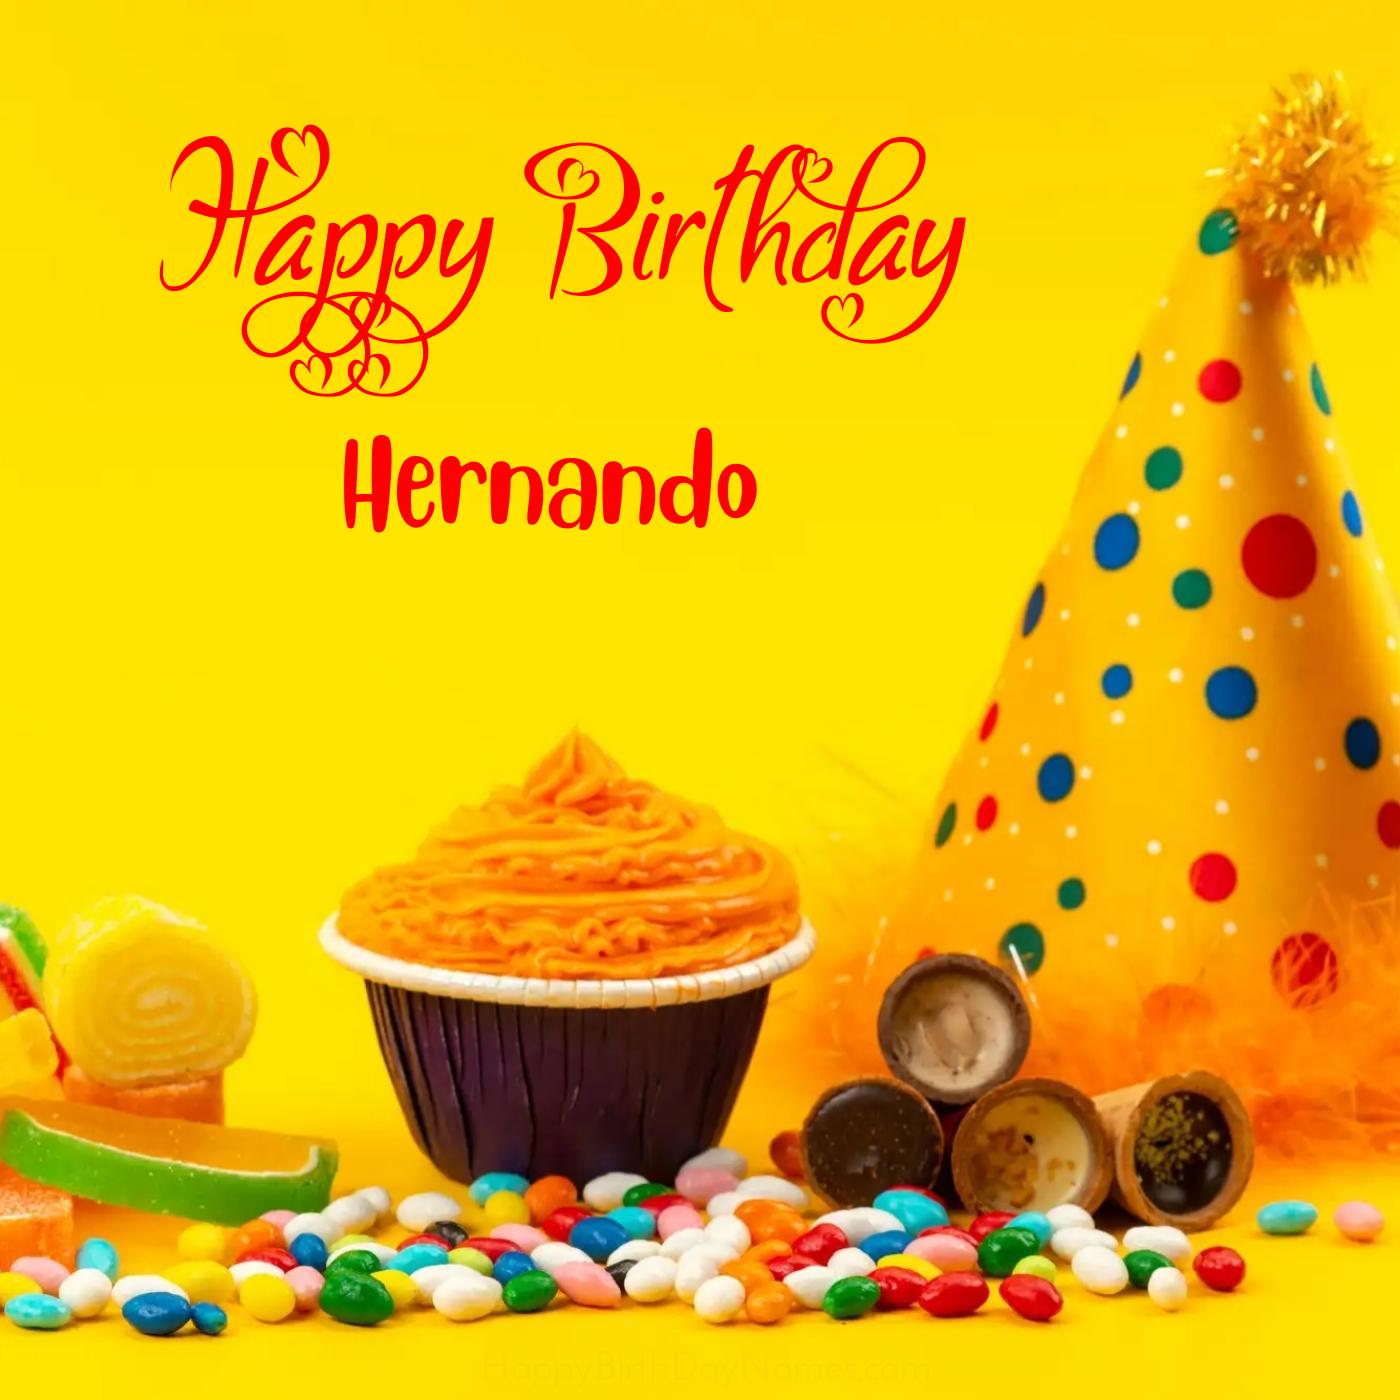 Happy Birthday Hernando Colourful Celebration Card